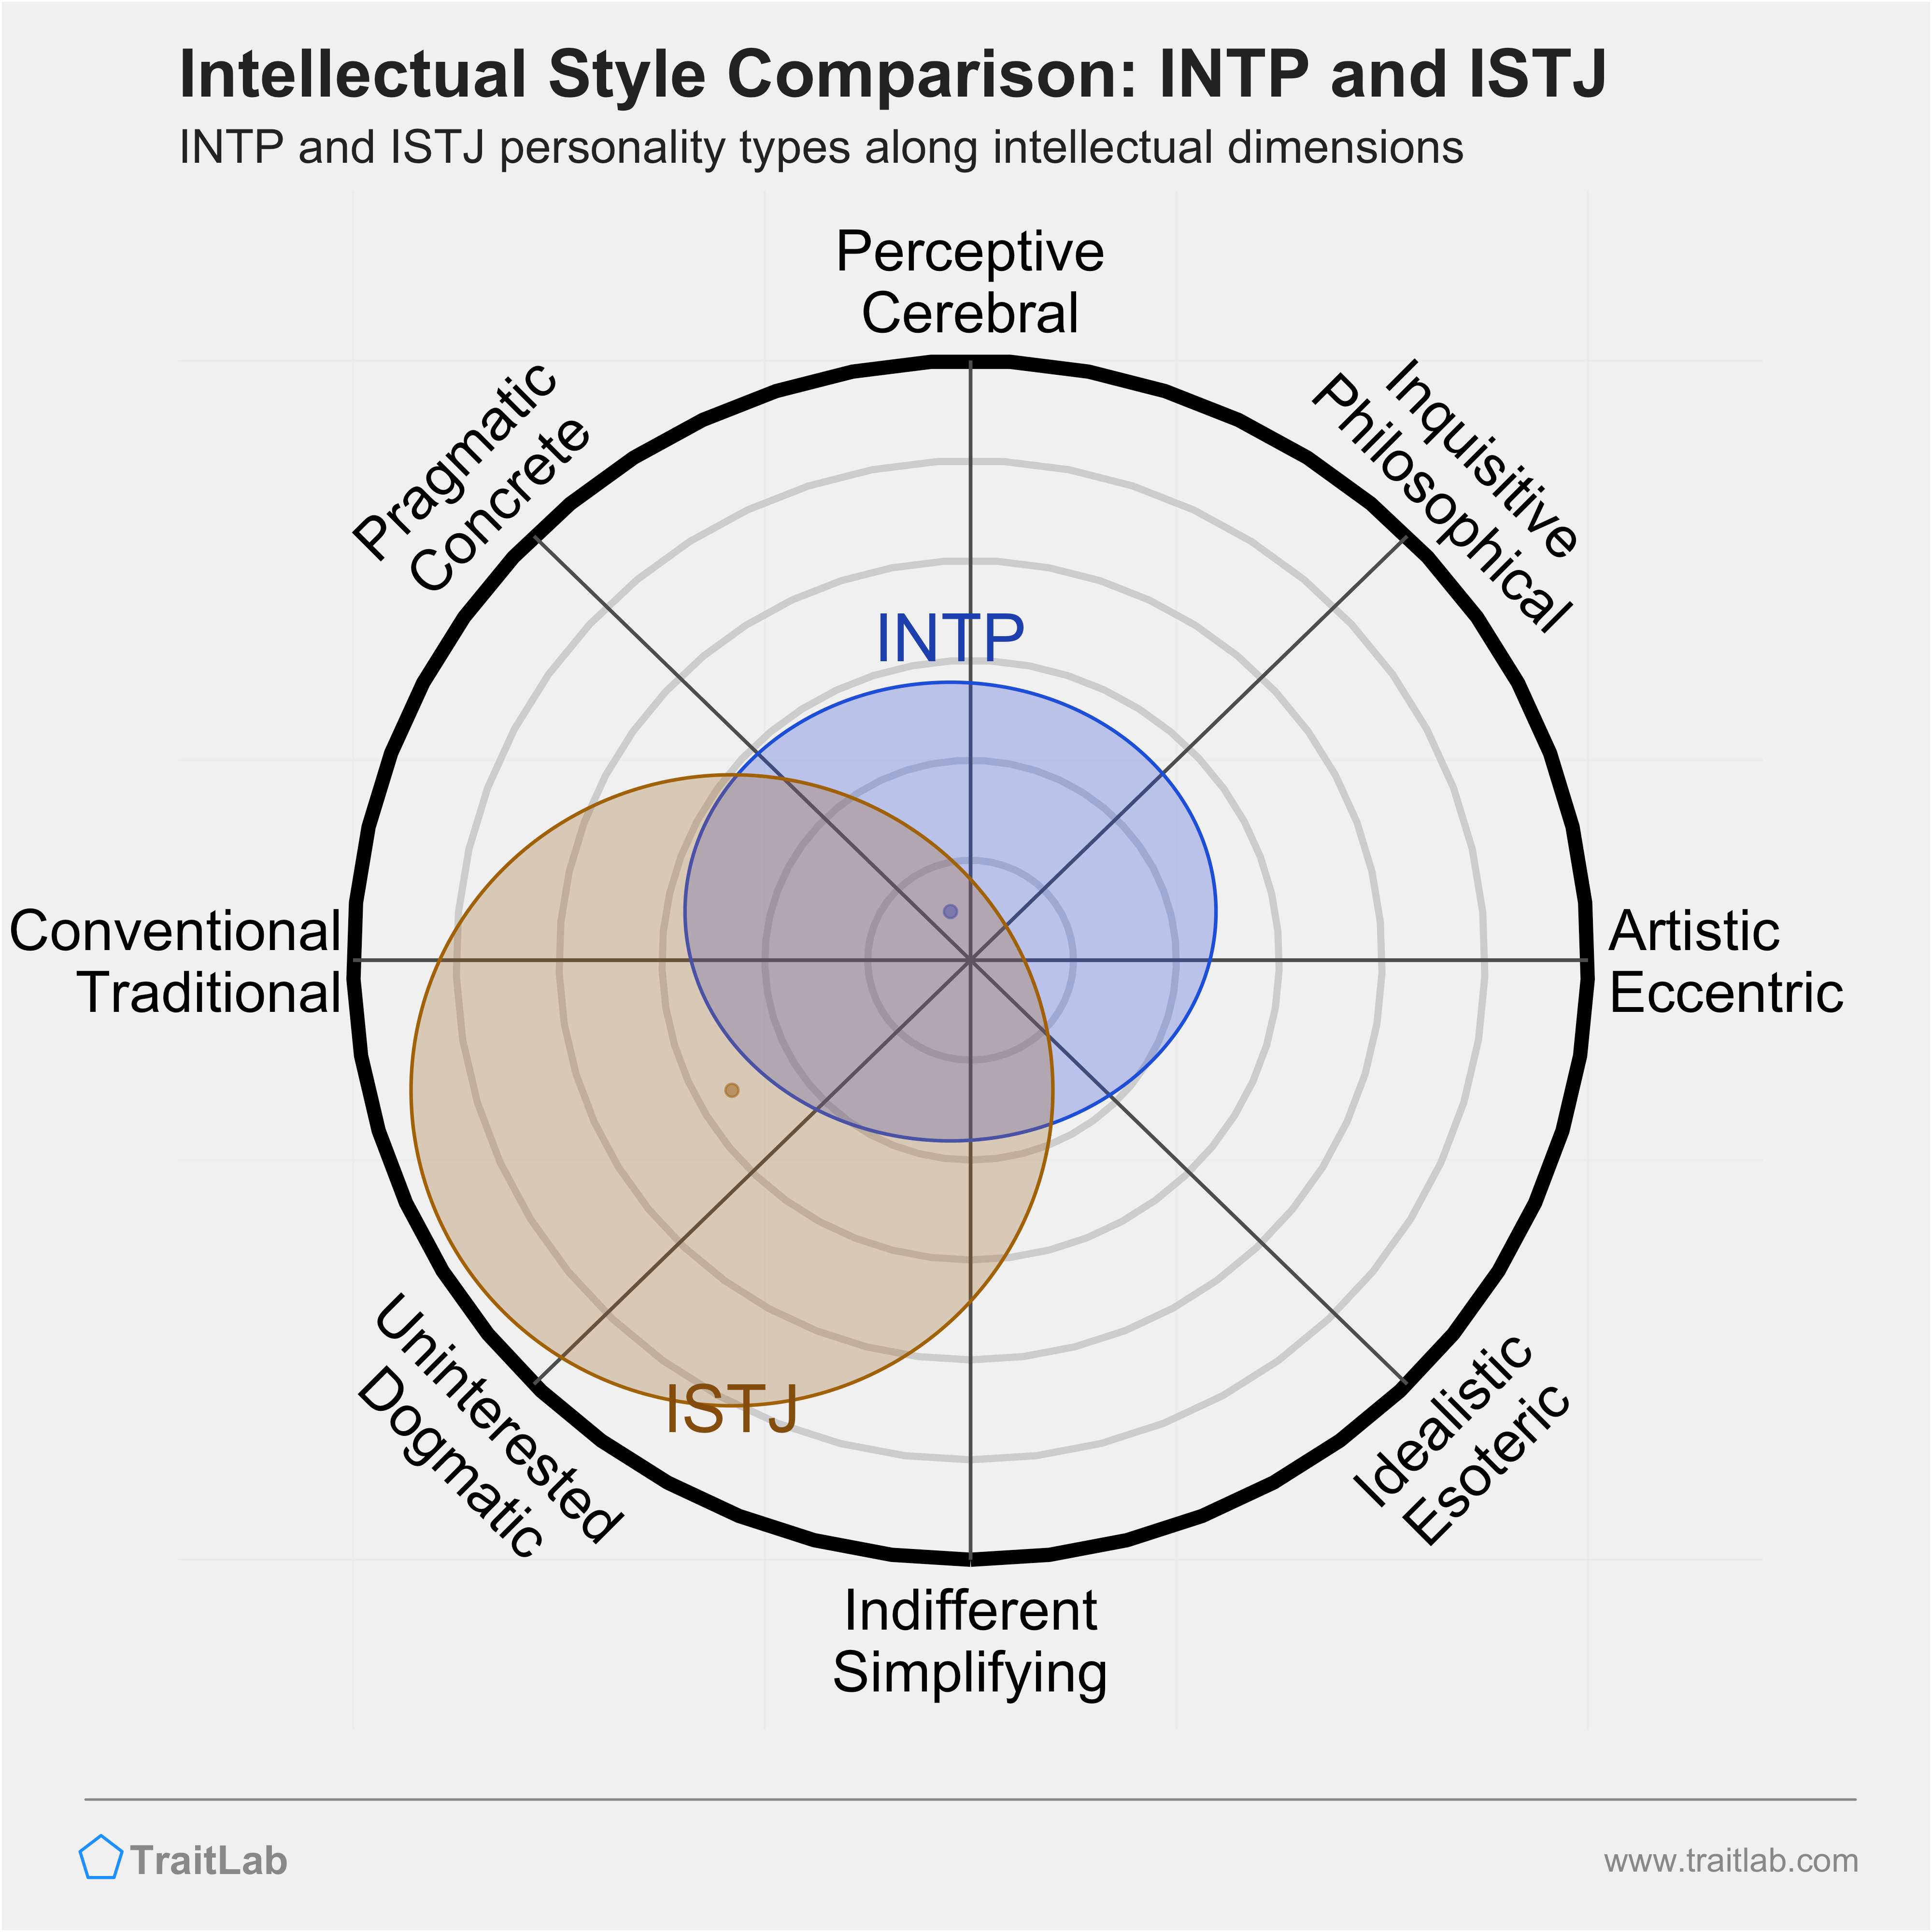 INTP and ISTJ comparison across intellectual dimensions